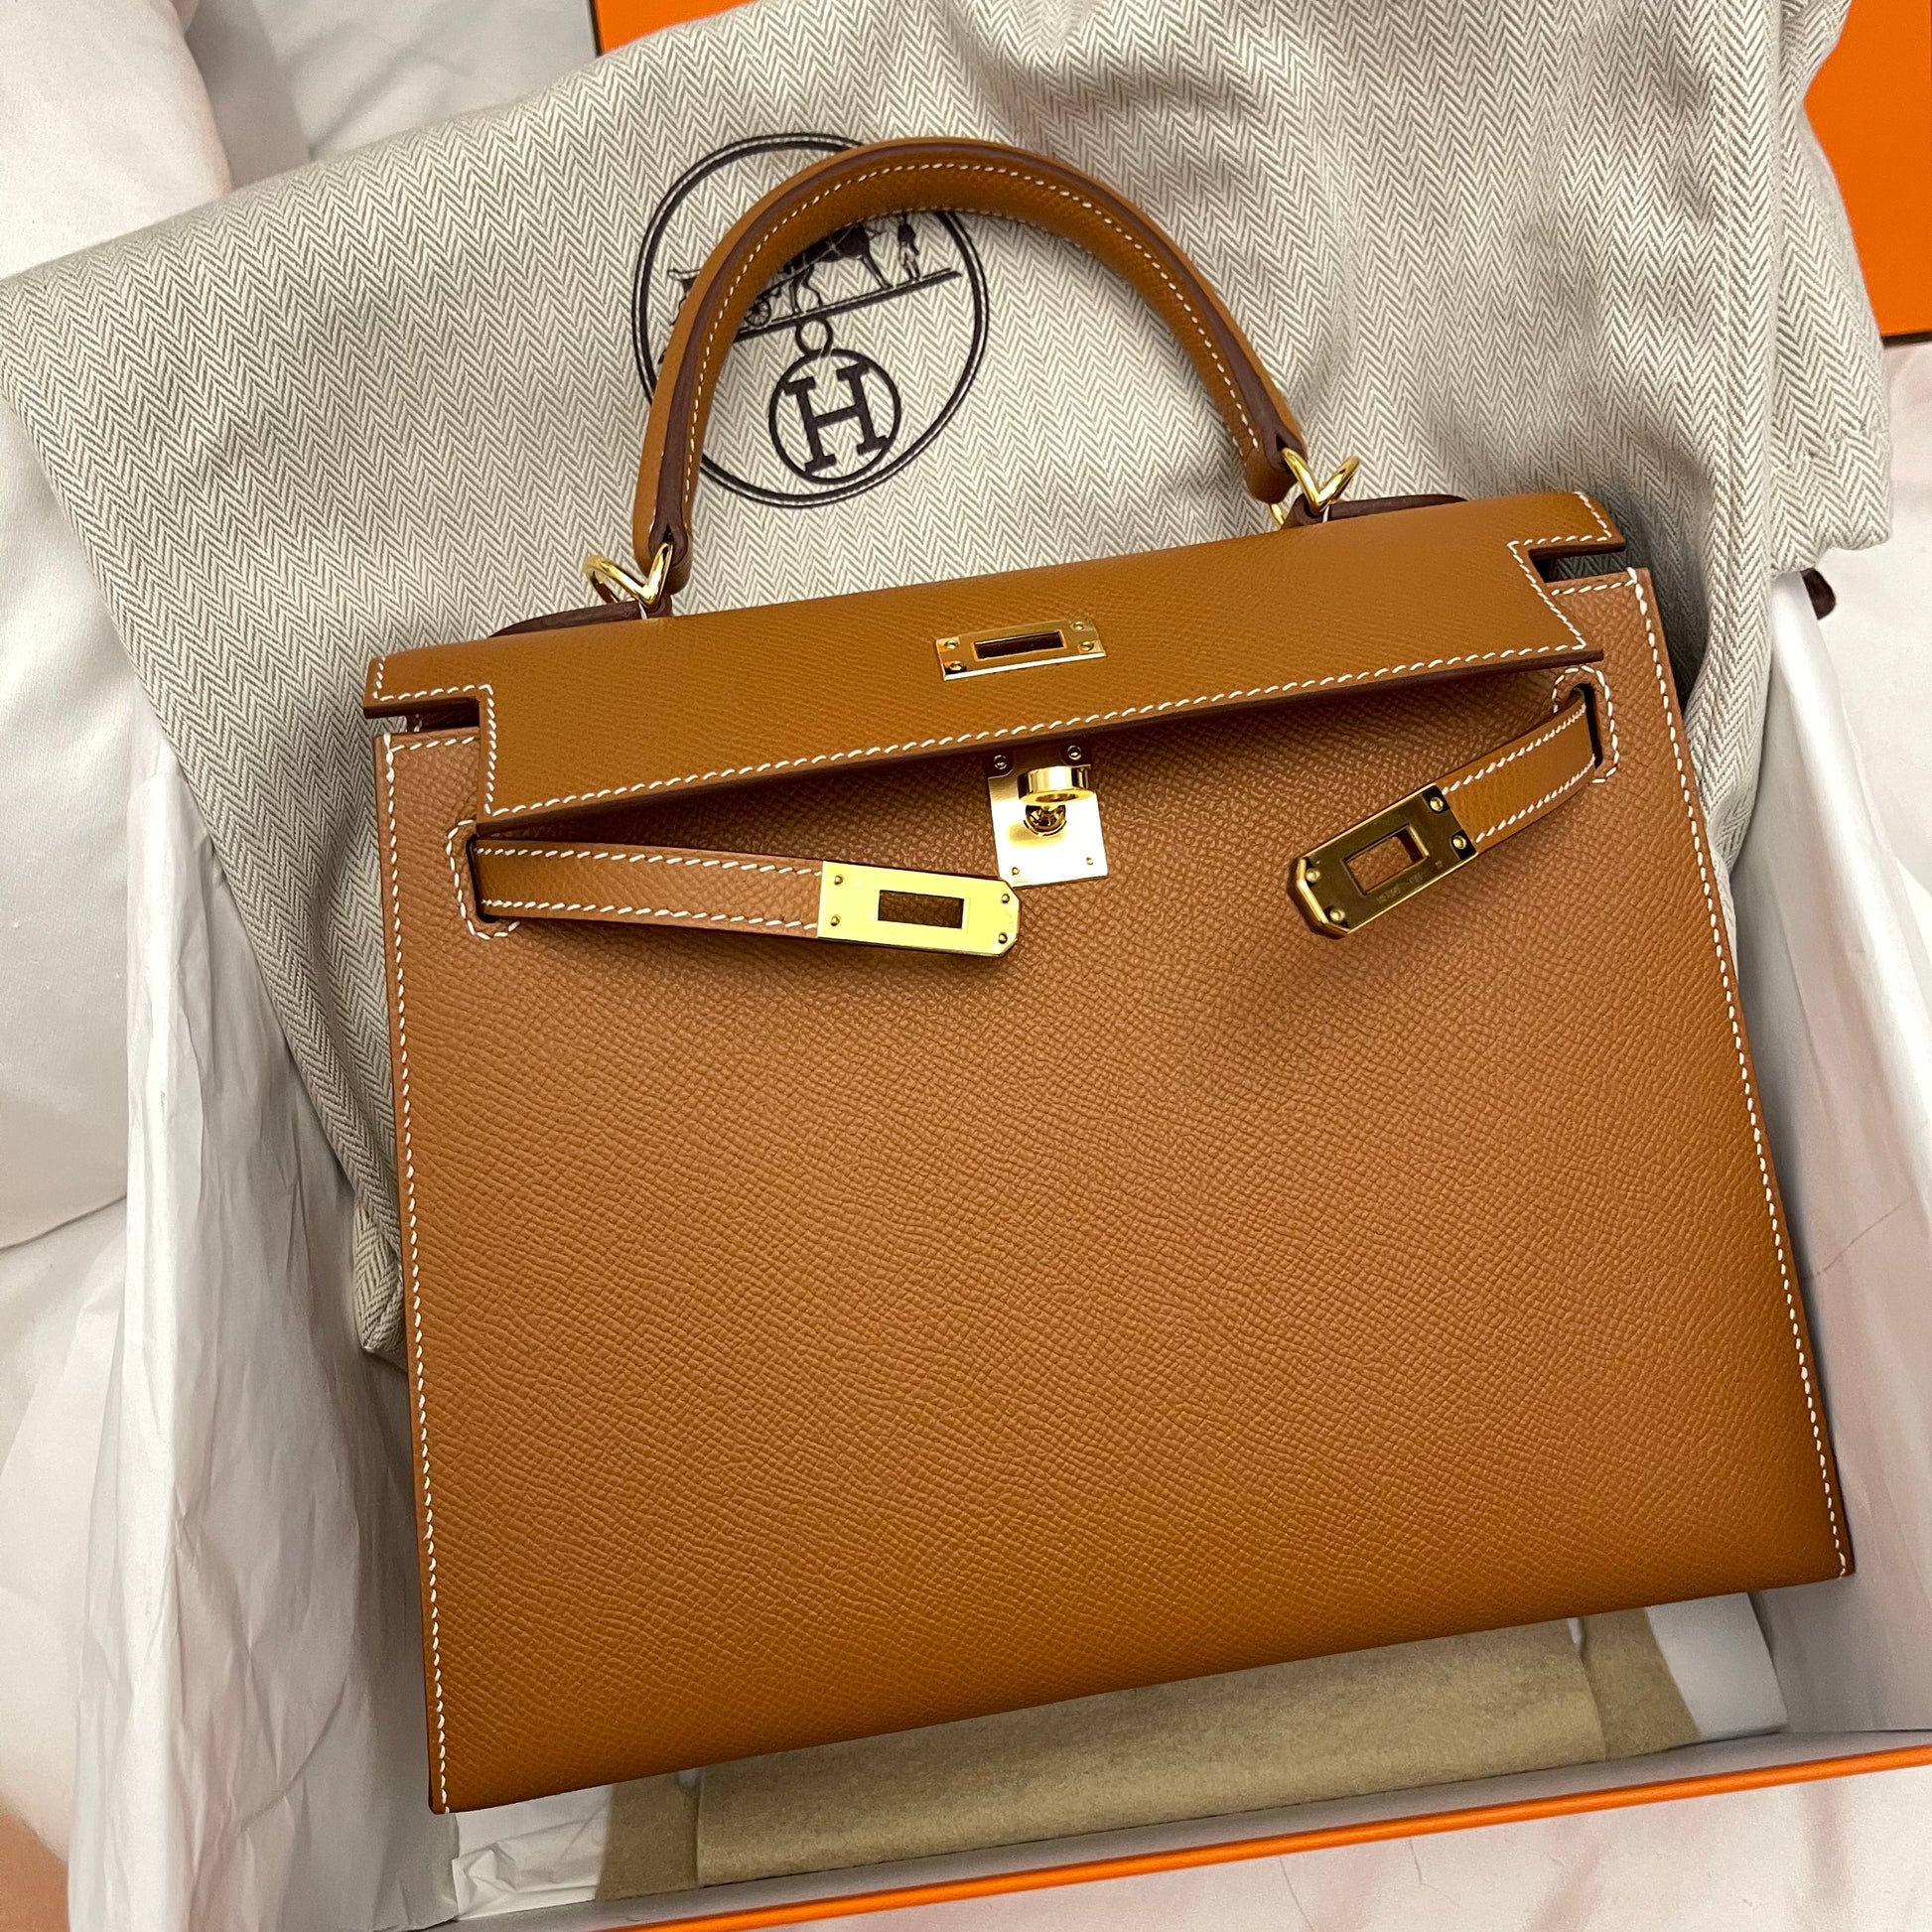 Hermès Kelly 25 Handbag